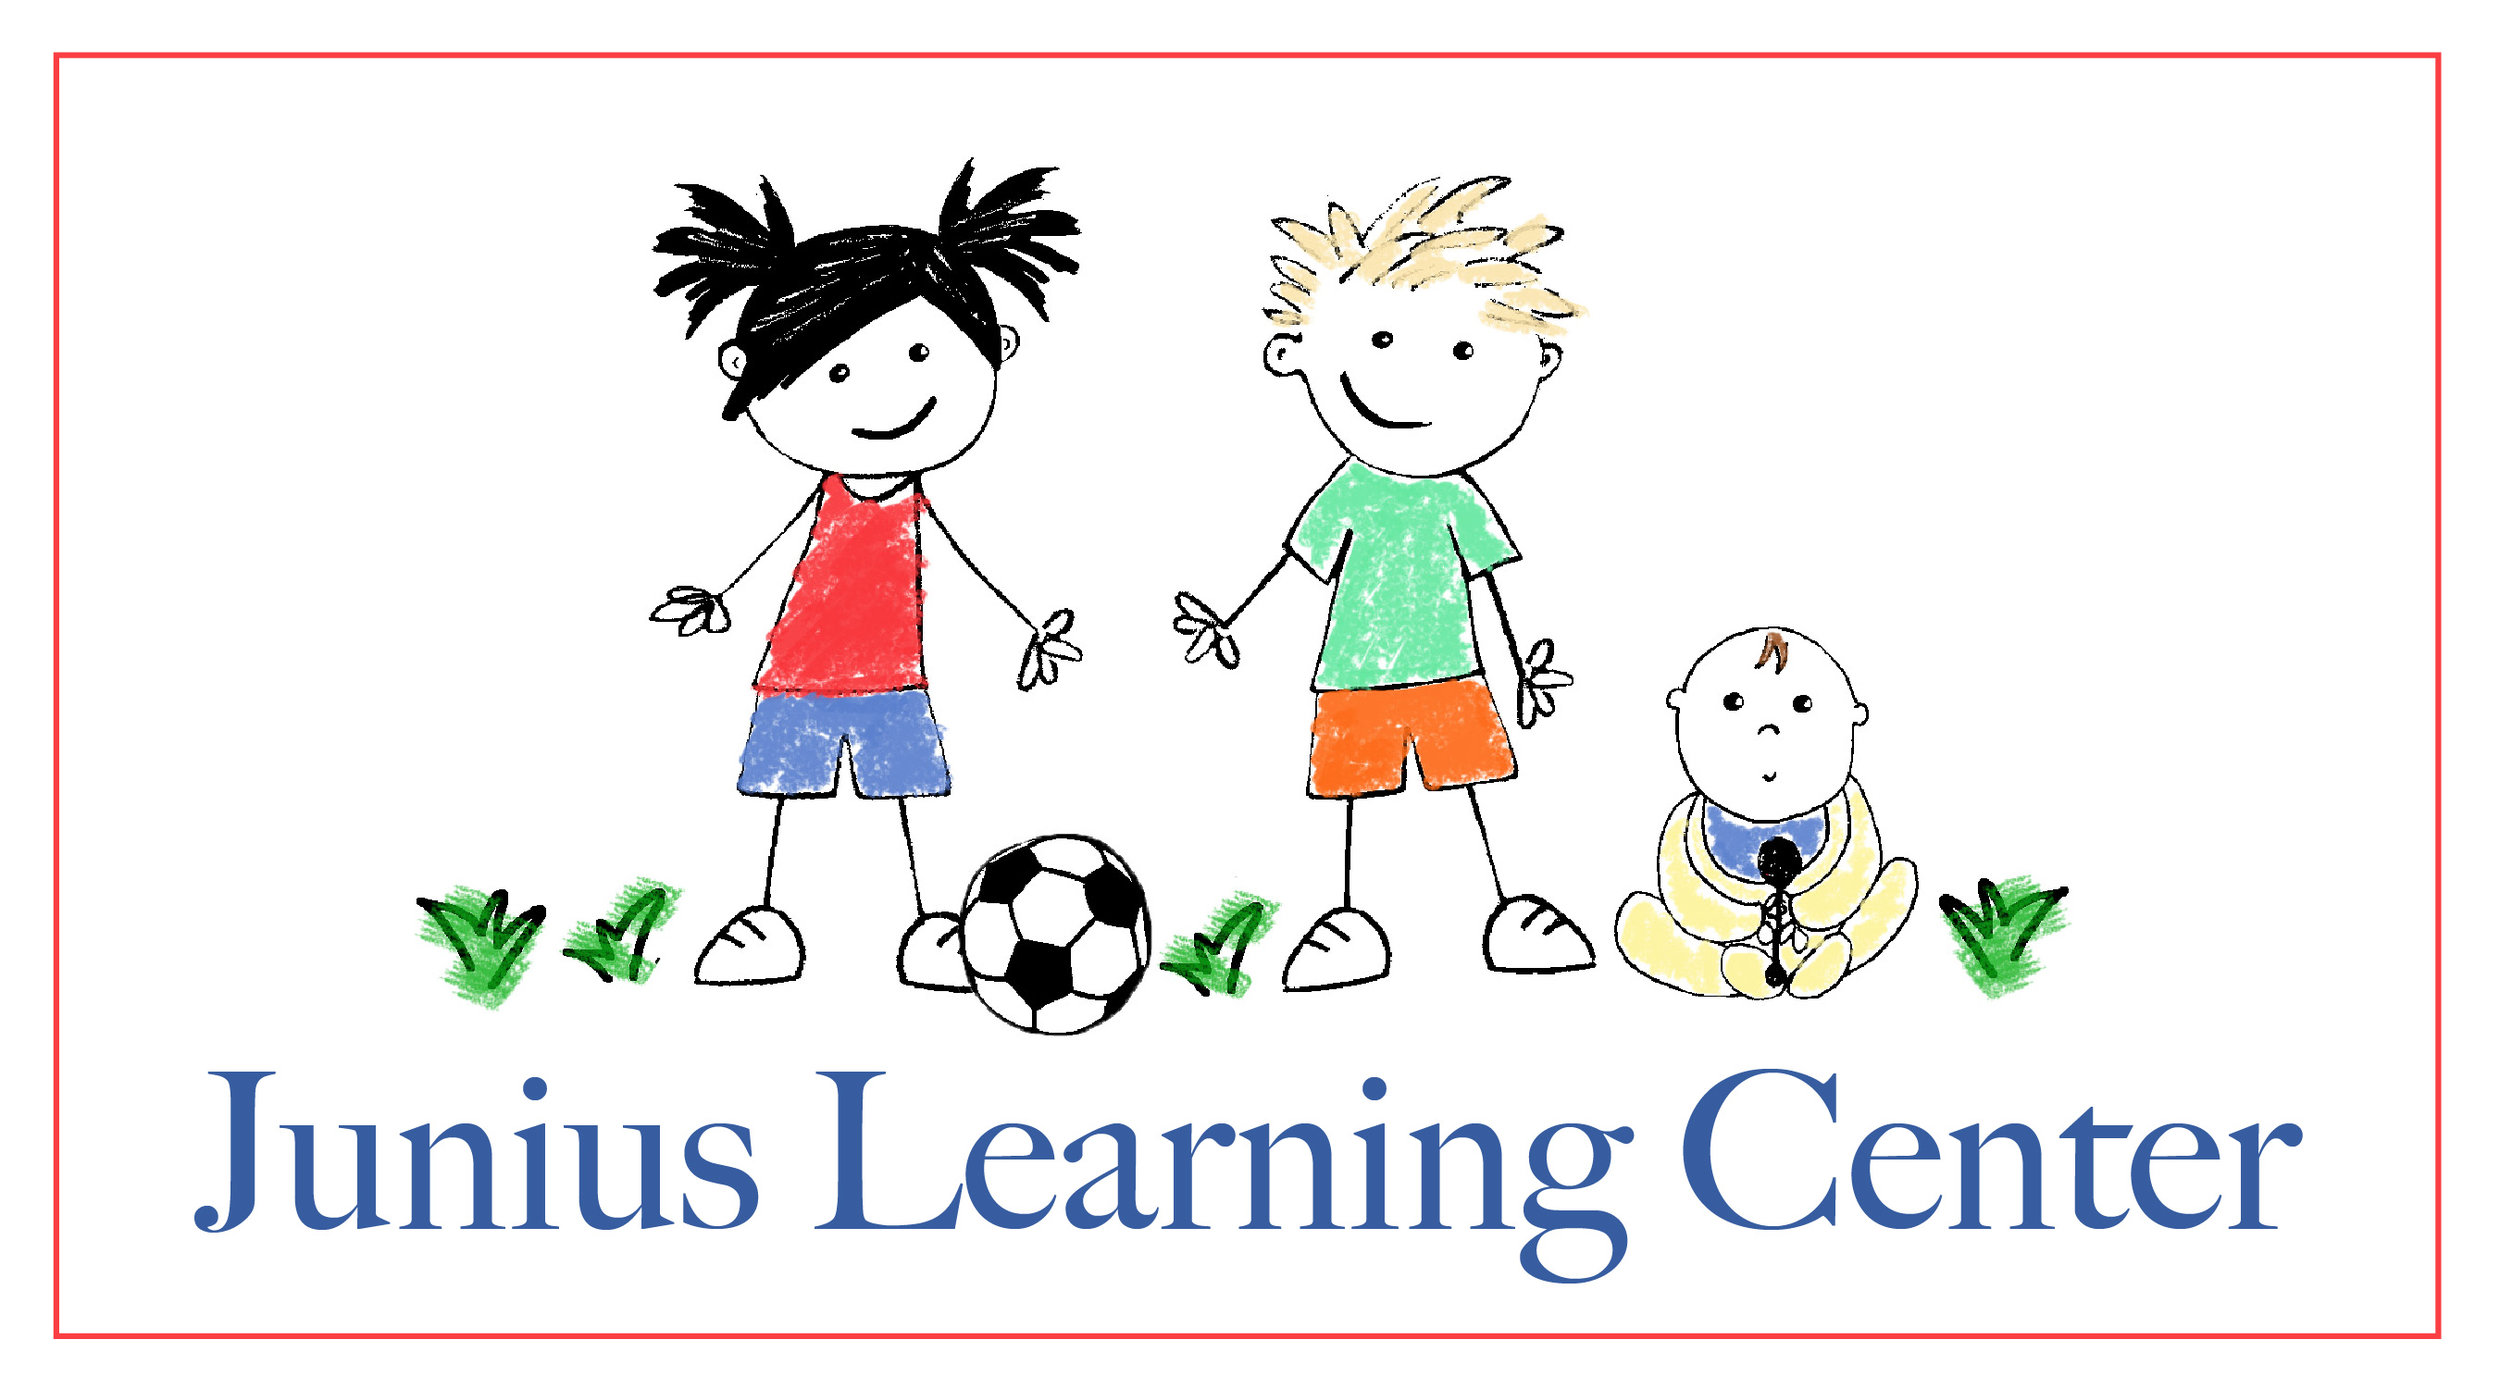 Junius Learning Center